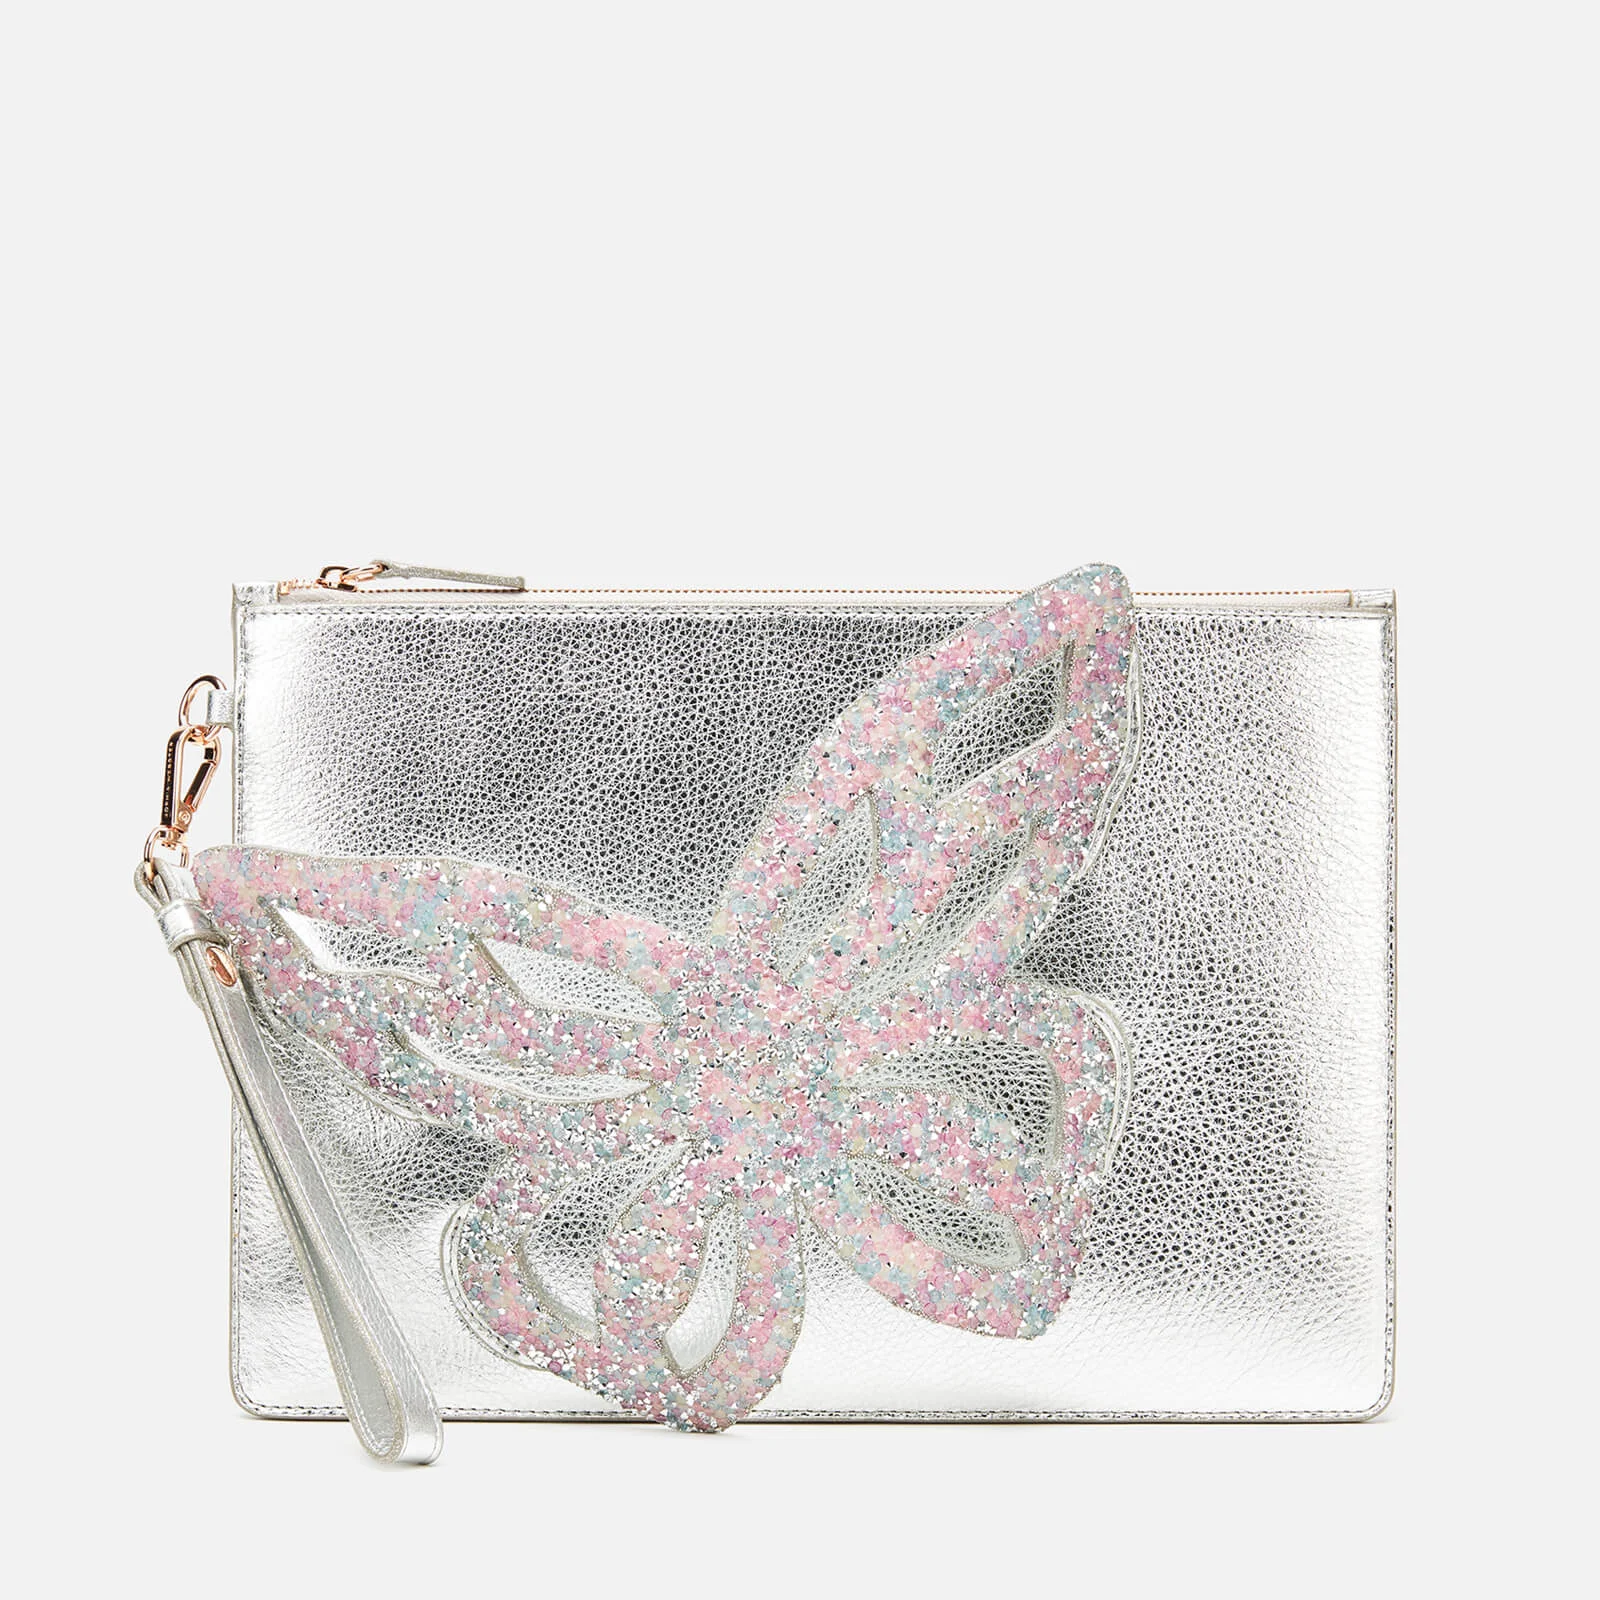 Sophia Webster Women's Flossy Butterfly Embellished Pouchette Bag - Silver Image 1